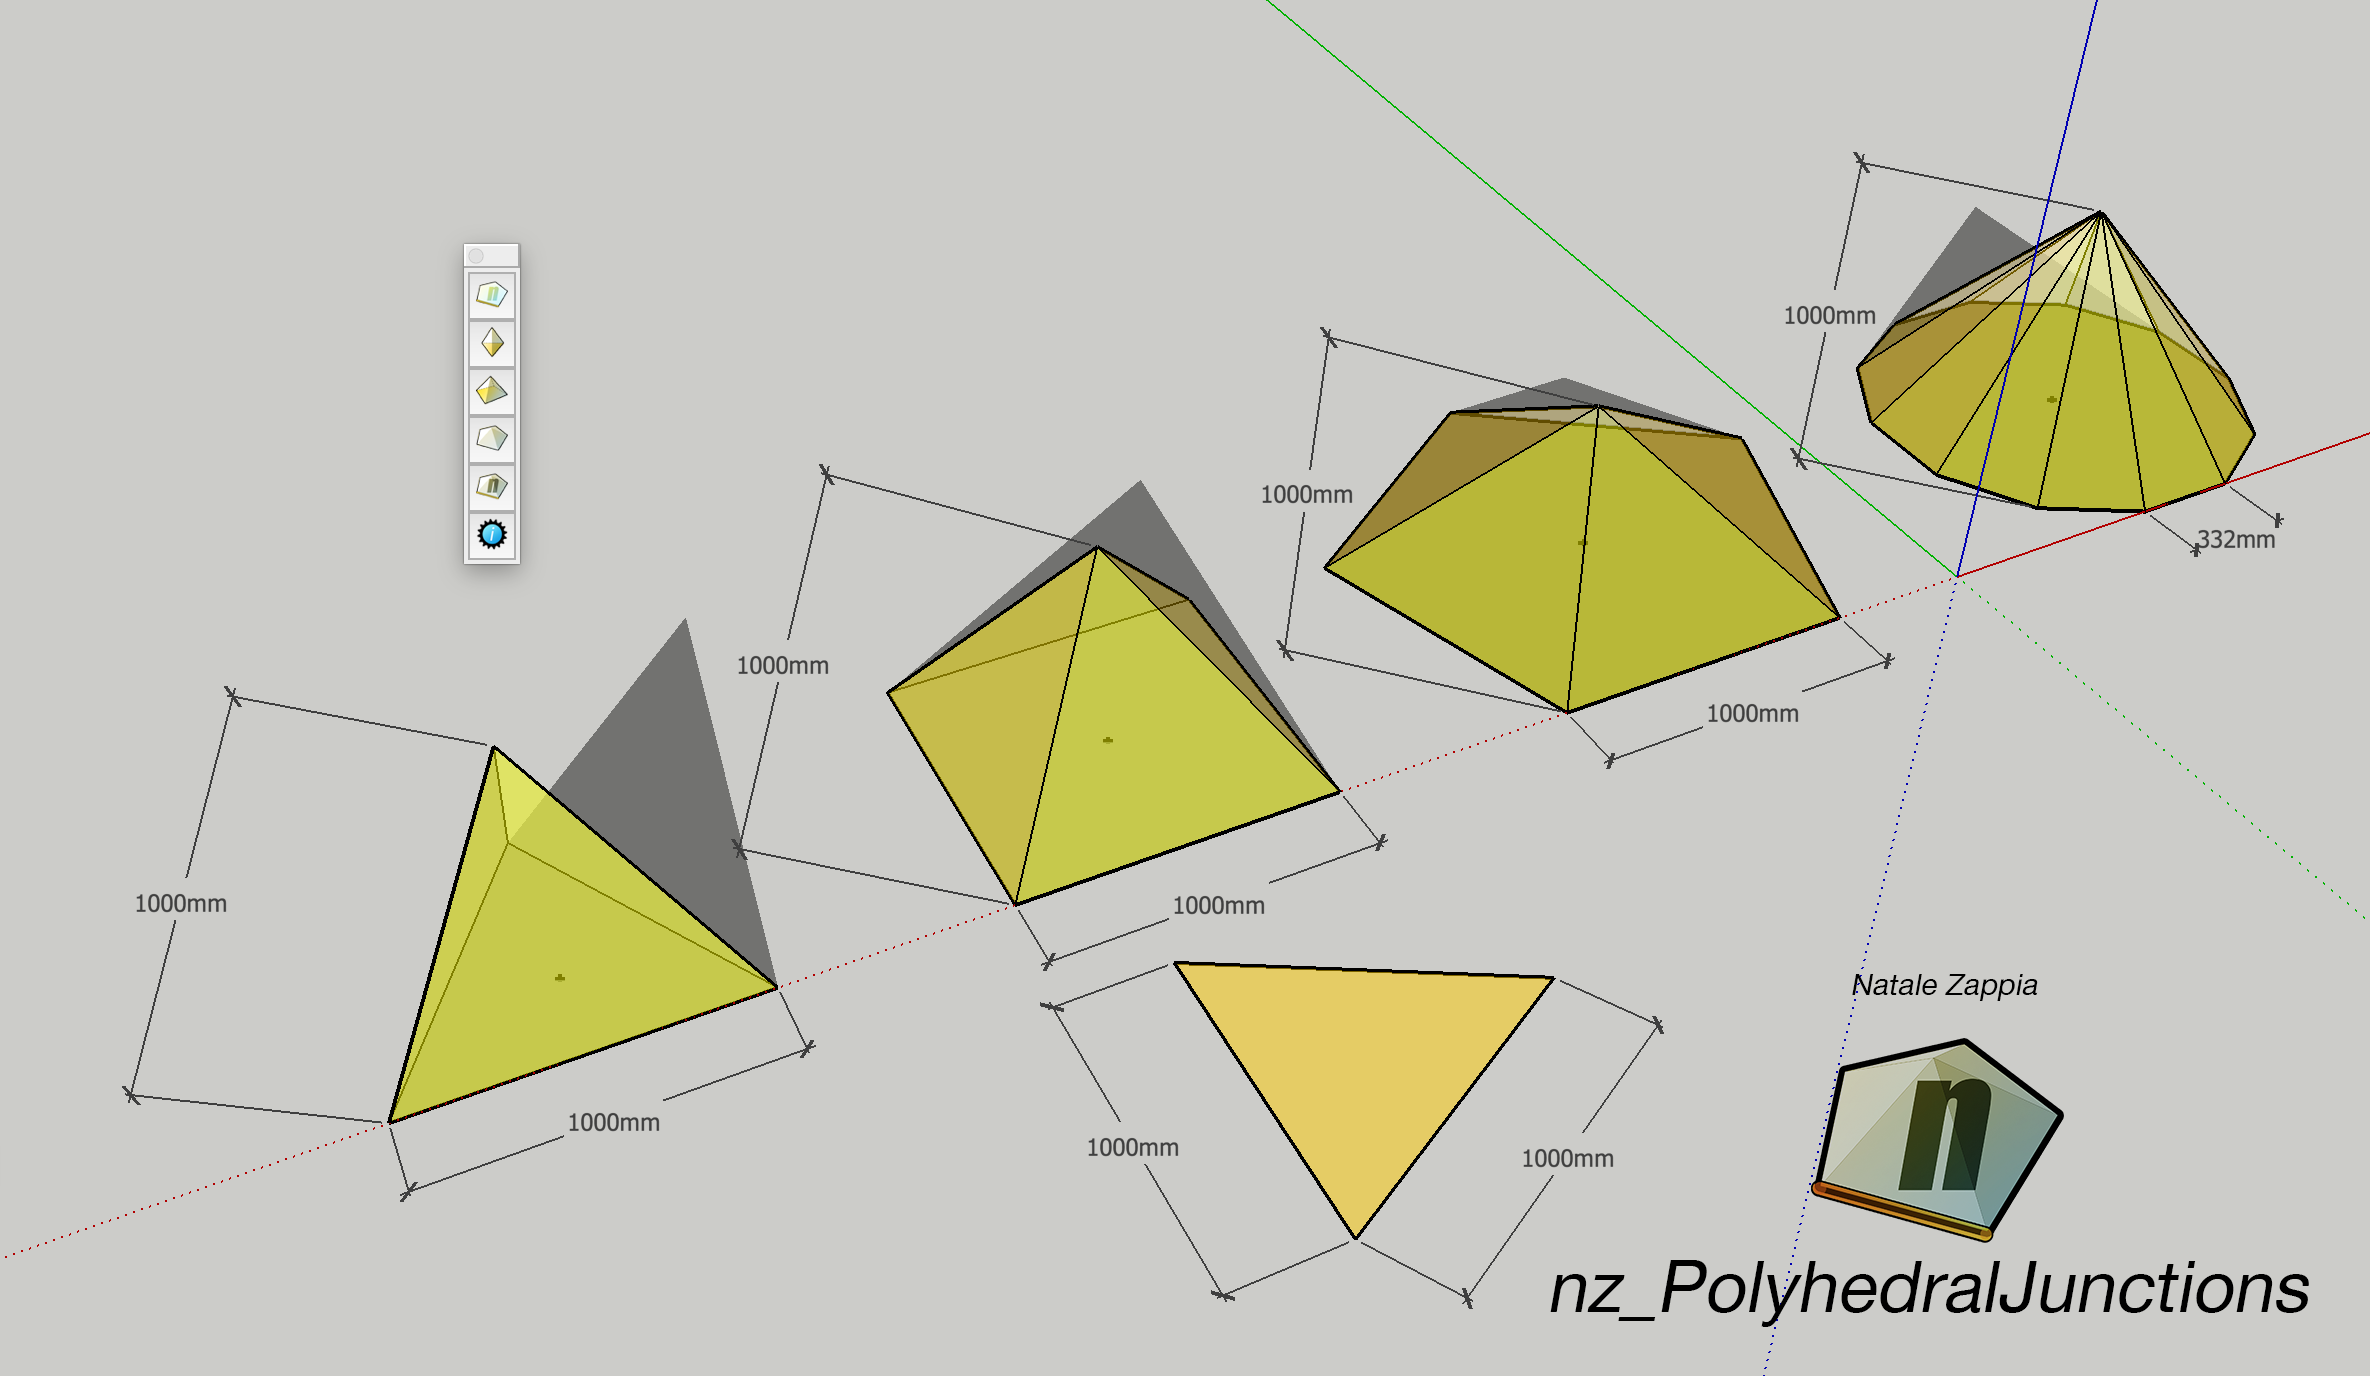 nz_PolyhedralJunctions